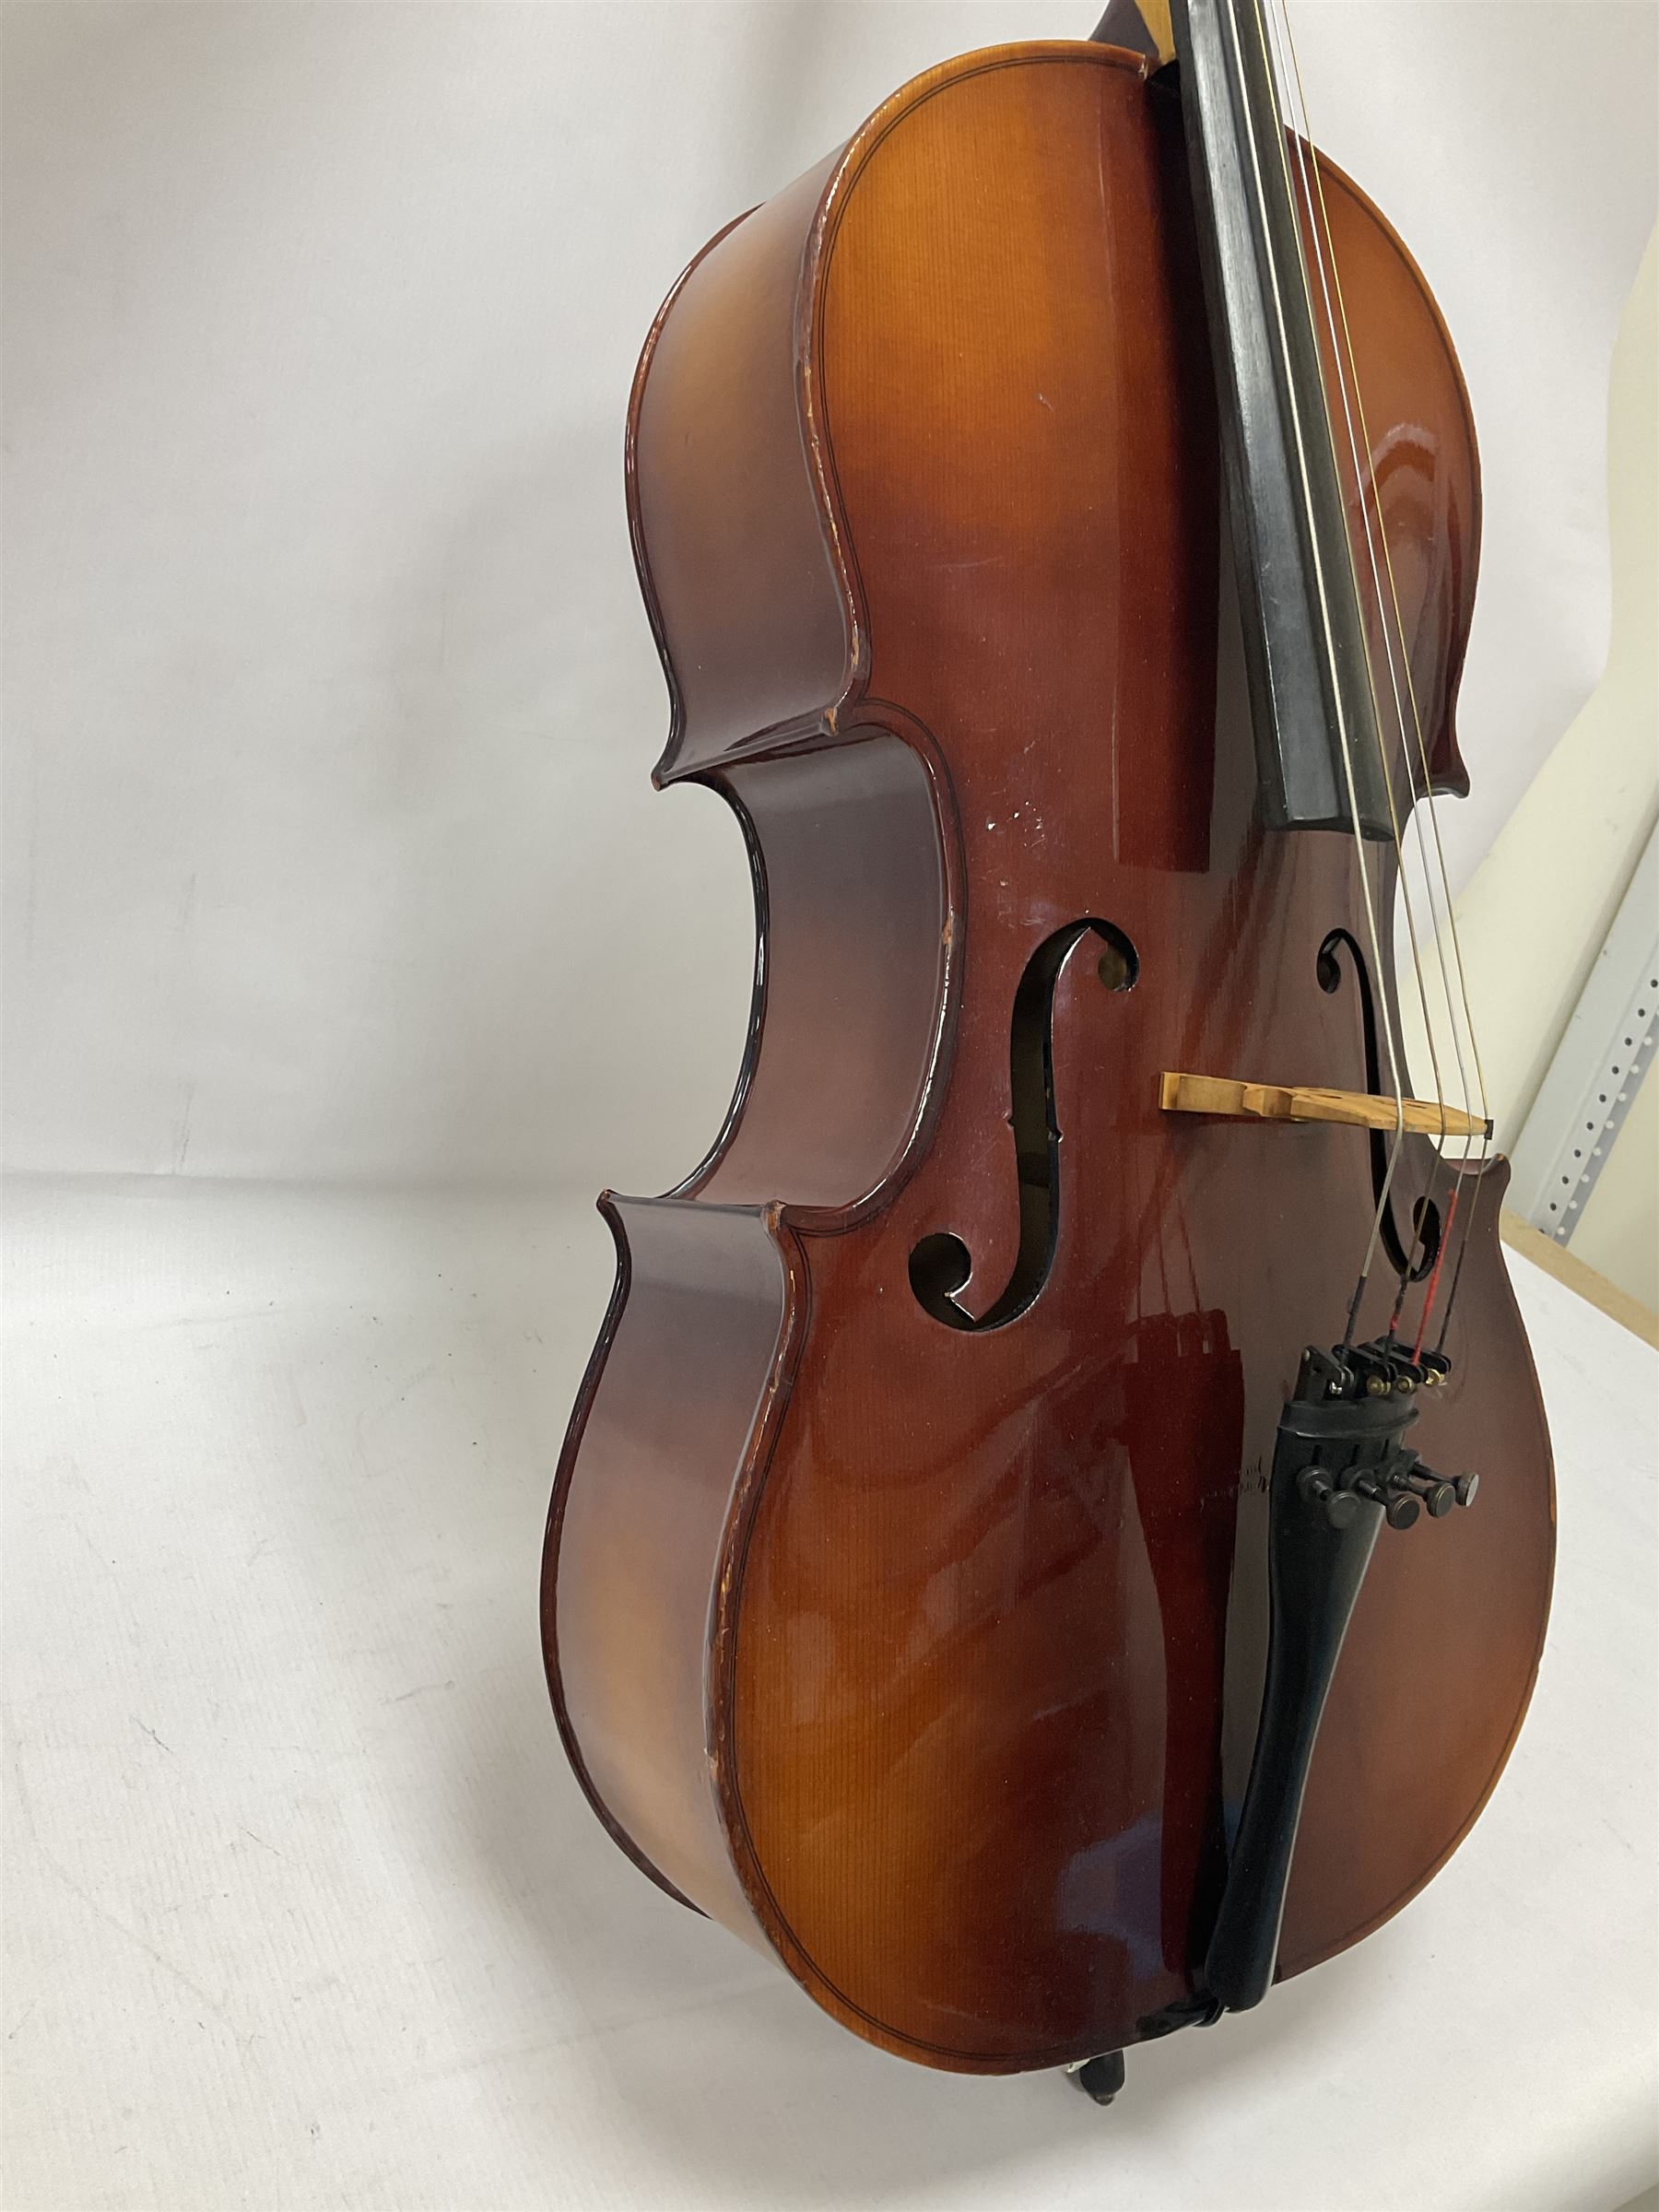 1974 German half size cello - Image 2 of 16